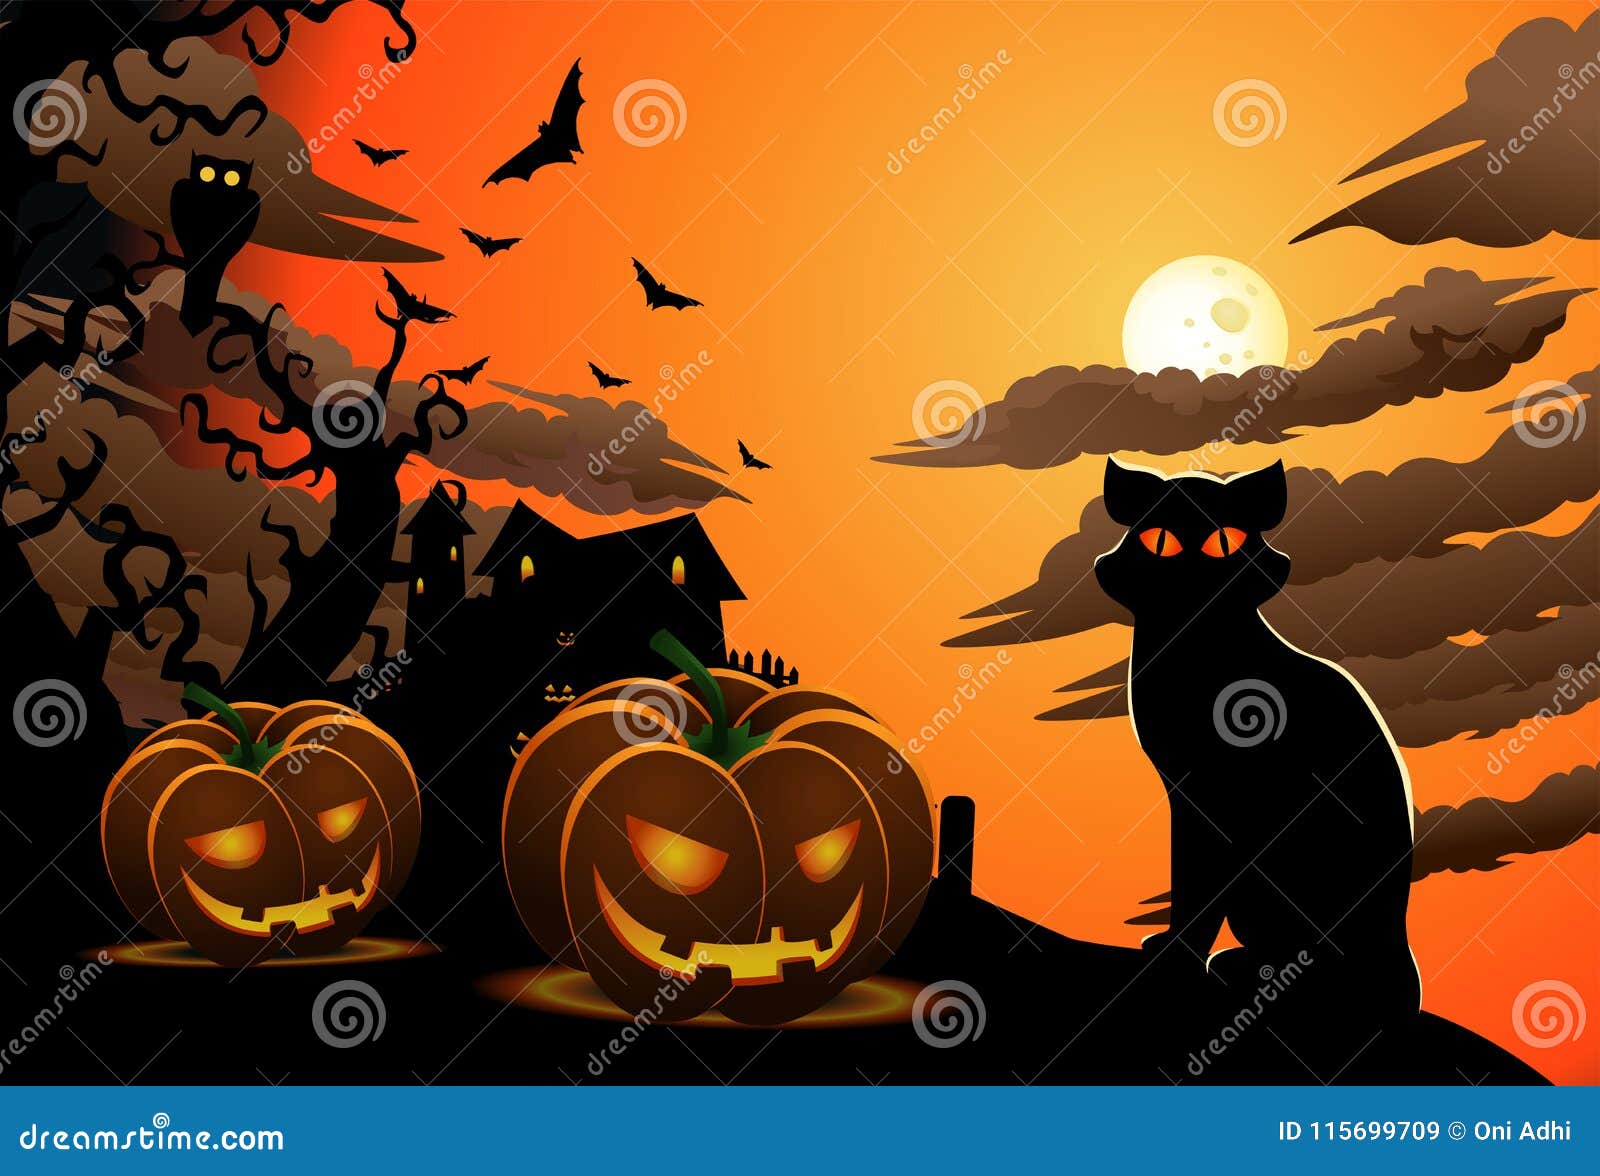 Free download Cute Cat Halloween Wallpaper 65 images 1920x1080 for your  Desktop Mobile  Tablet  Explore 57 Halloweenwallpaper  Halloween  Background Wallpaper For Halloween Background Halloween